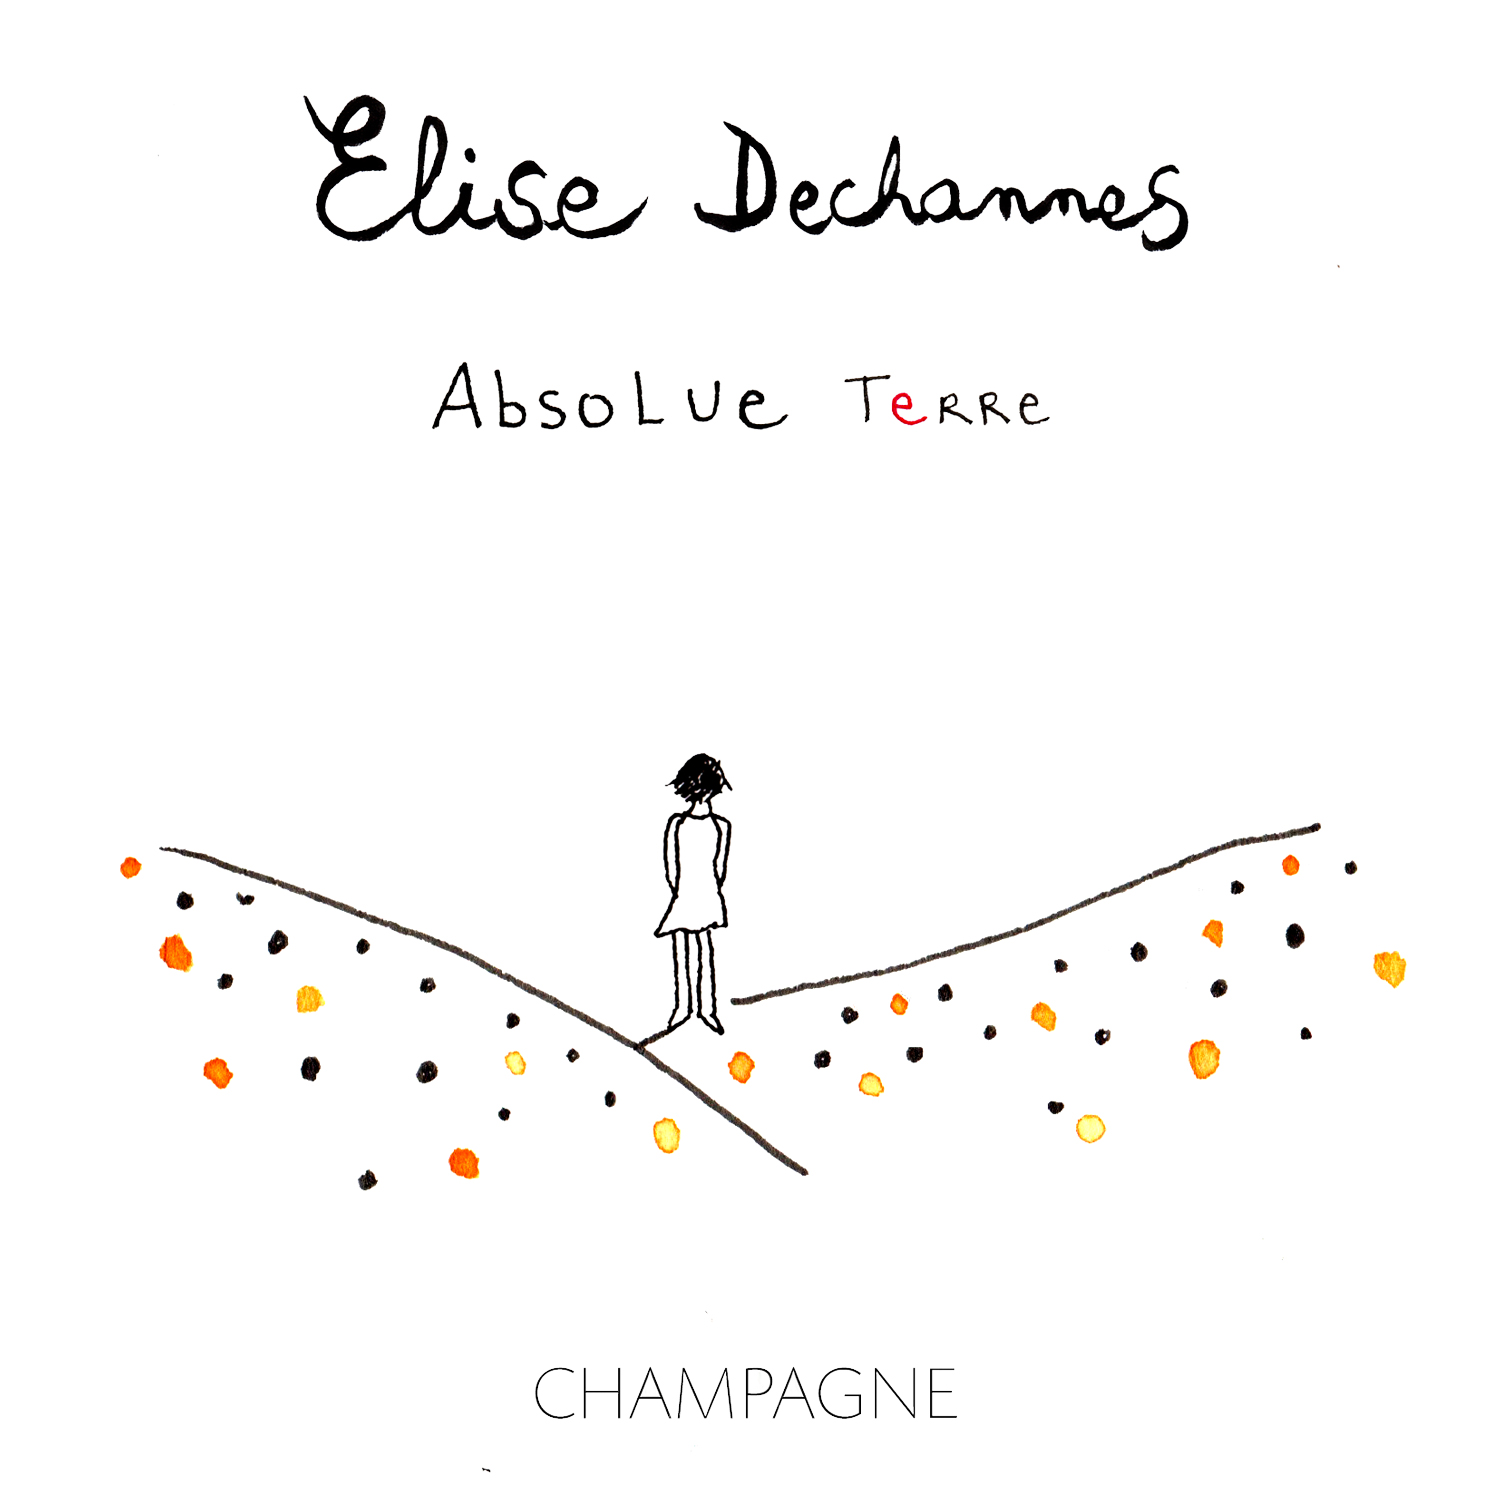 Champagne Elise Dechannes: Absolue Terre - Brut Nature